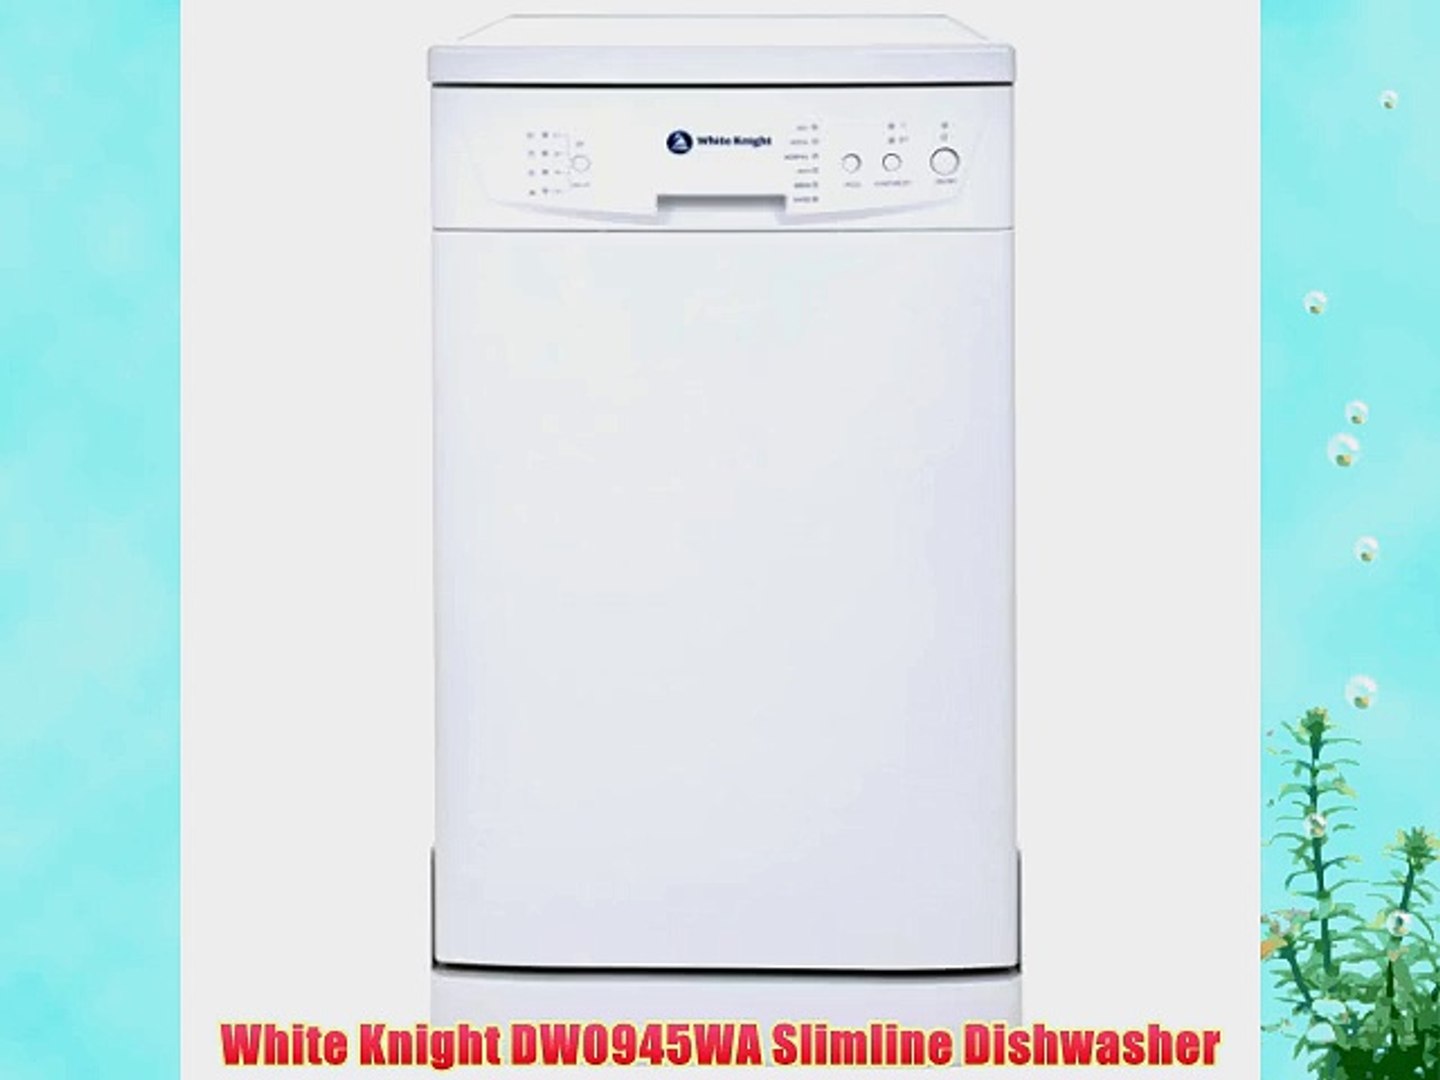 white knight dishwasher